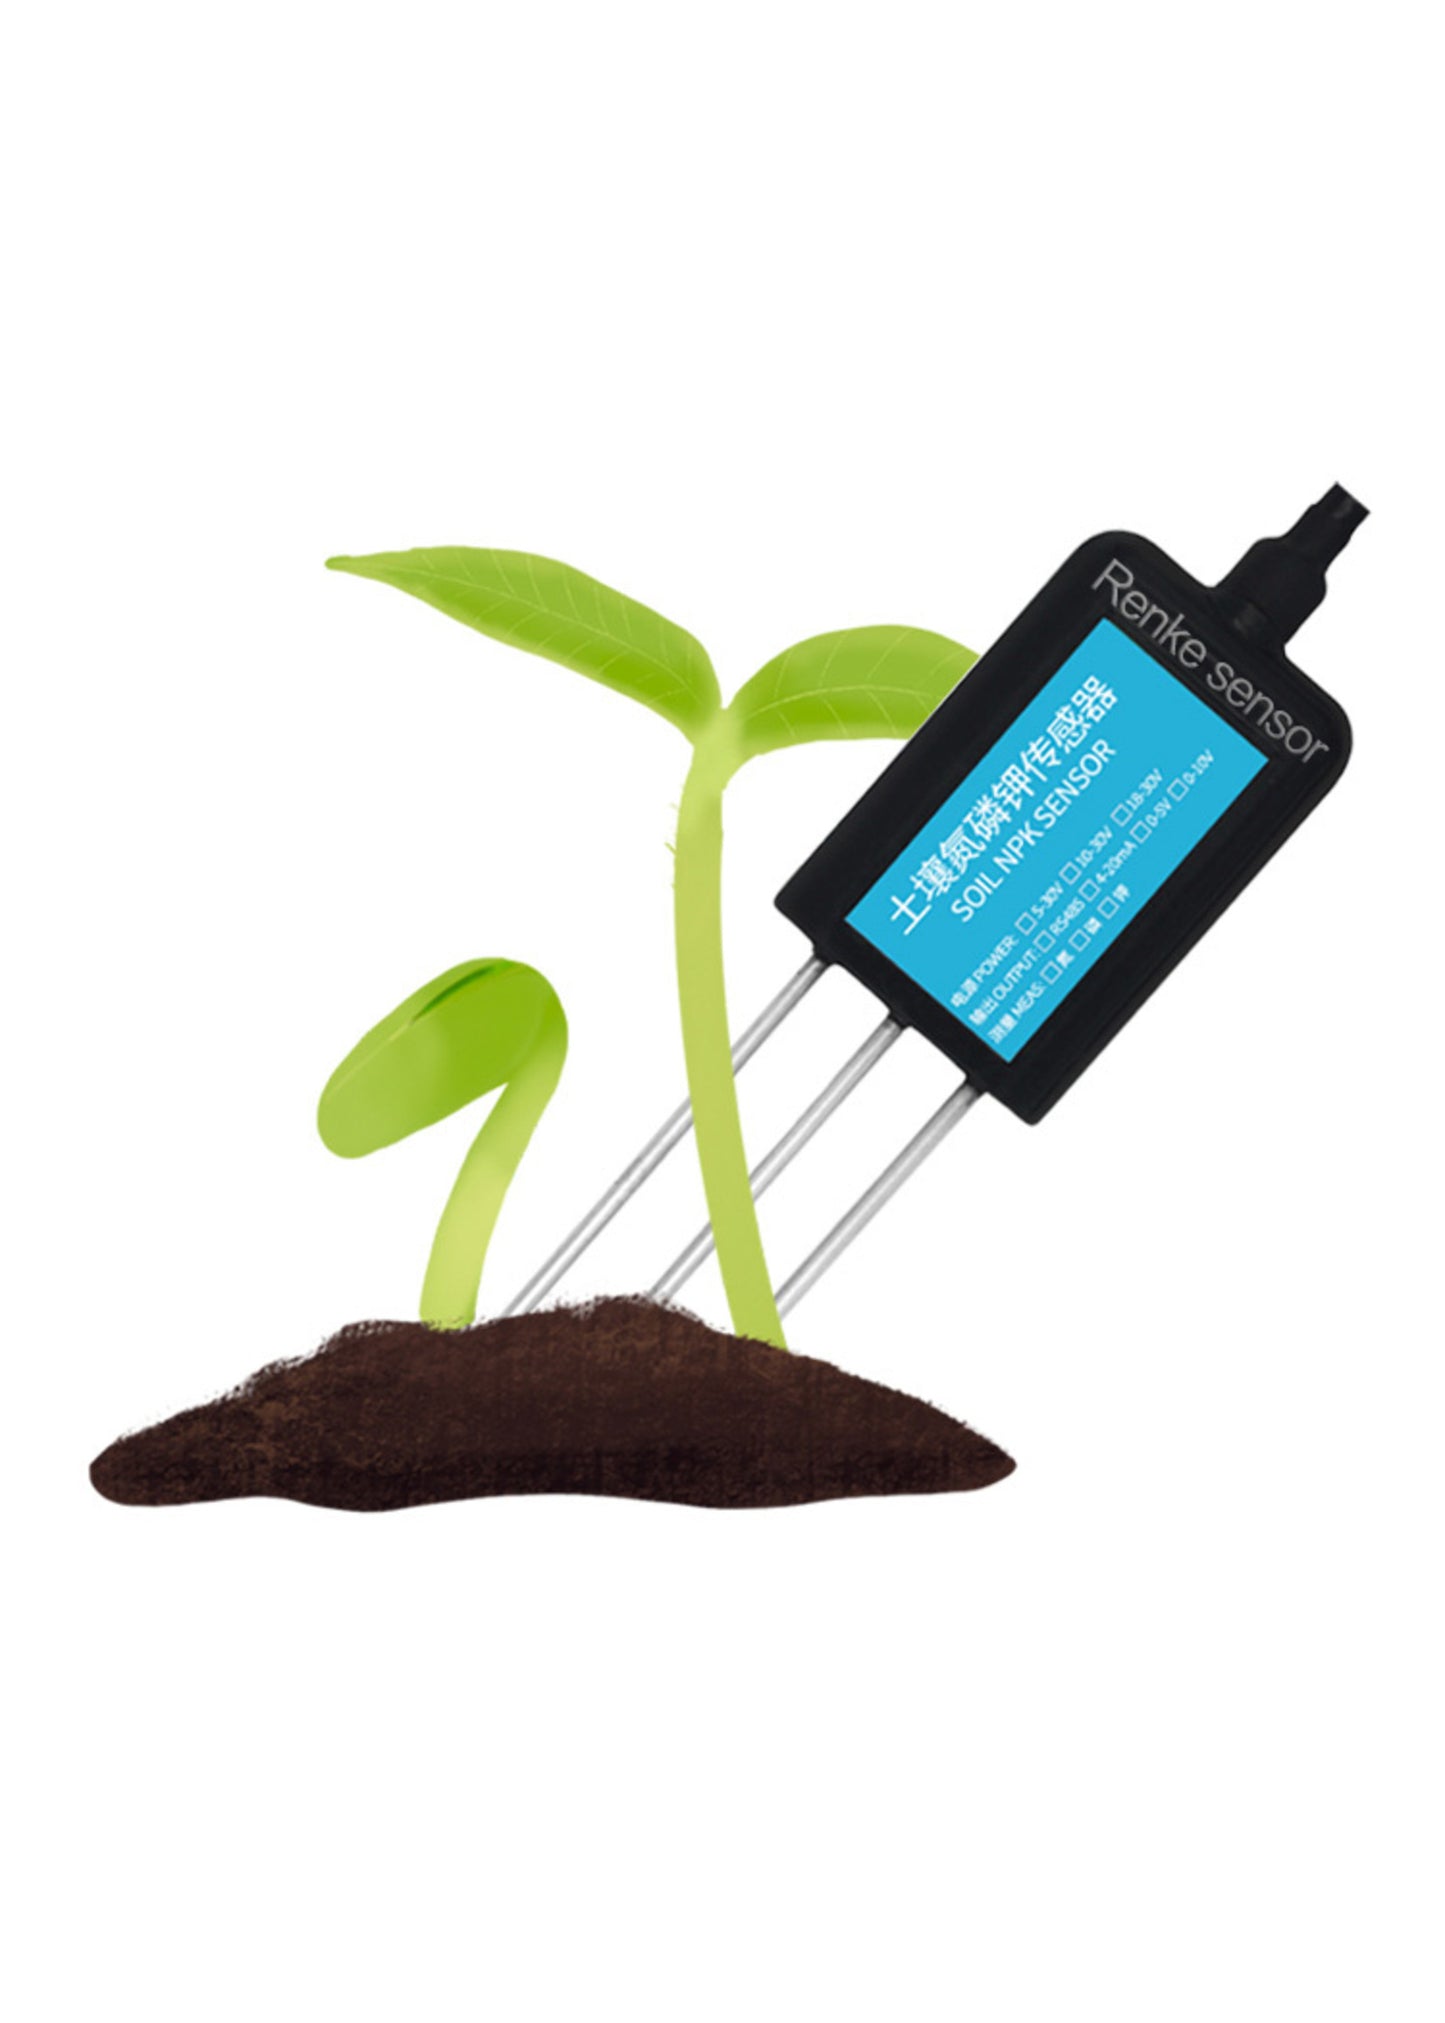 Soil NPK sensor